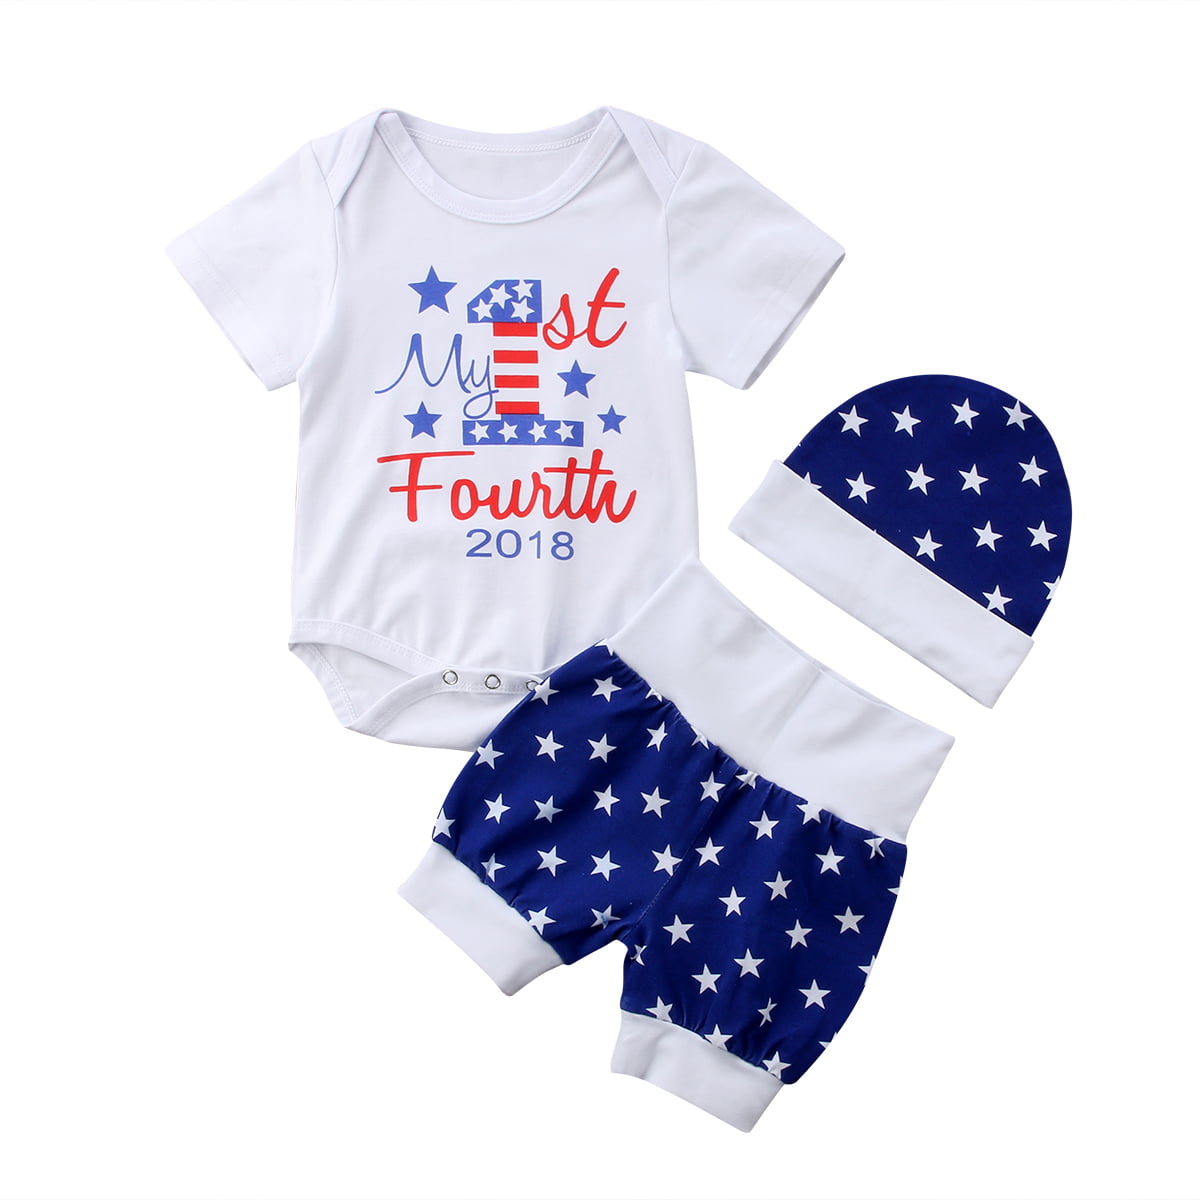 3pcs Baby Boy Girls Kids Newborn Infant Romper Hat Bodysuit Outfit Clothing Set